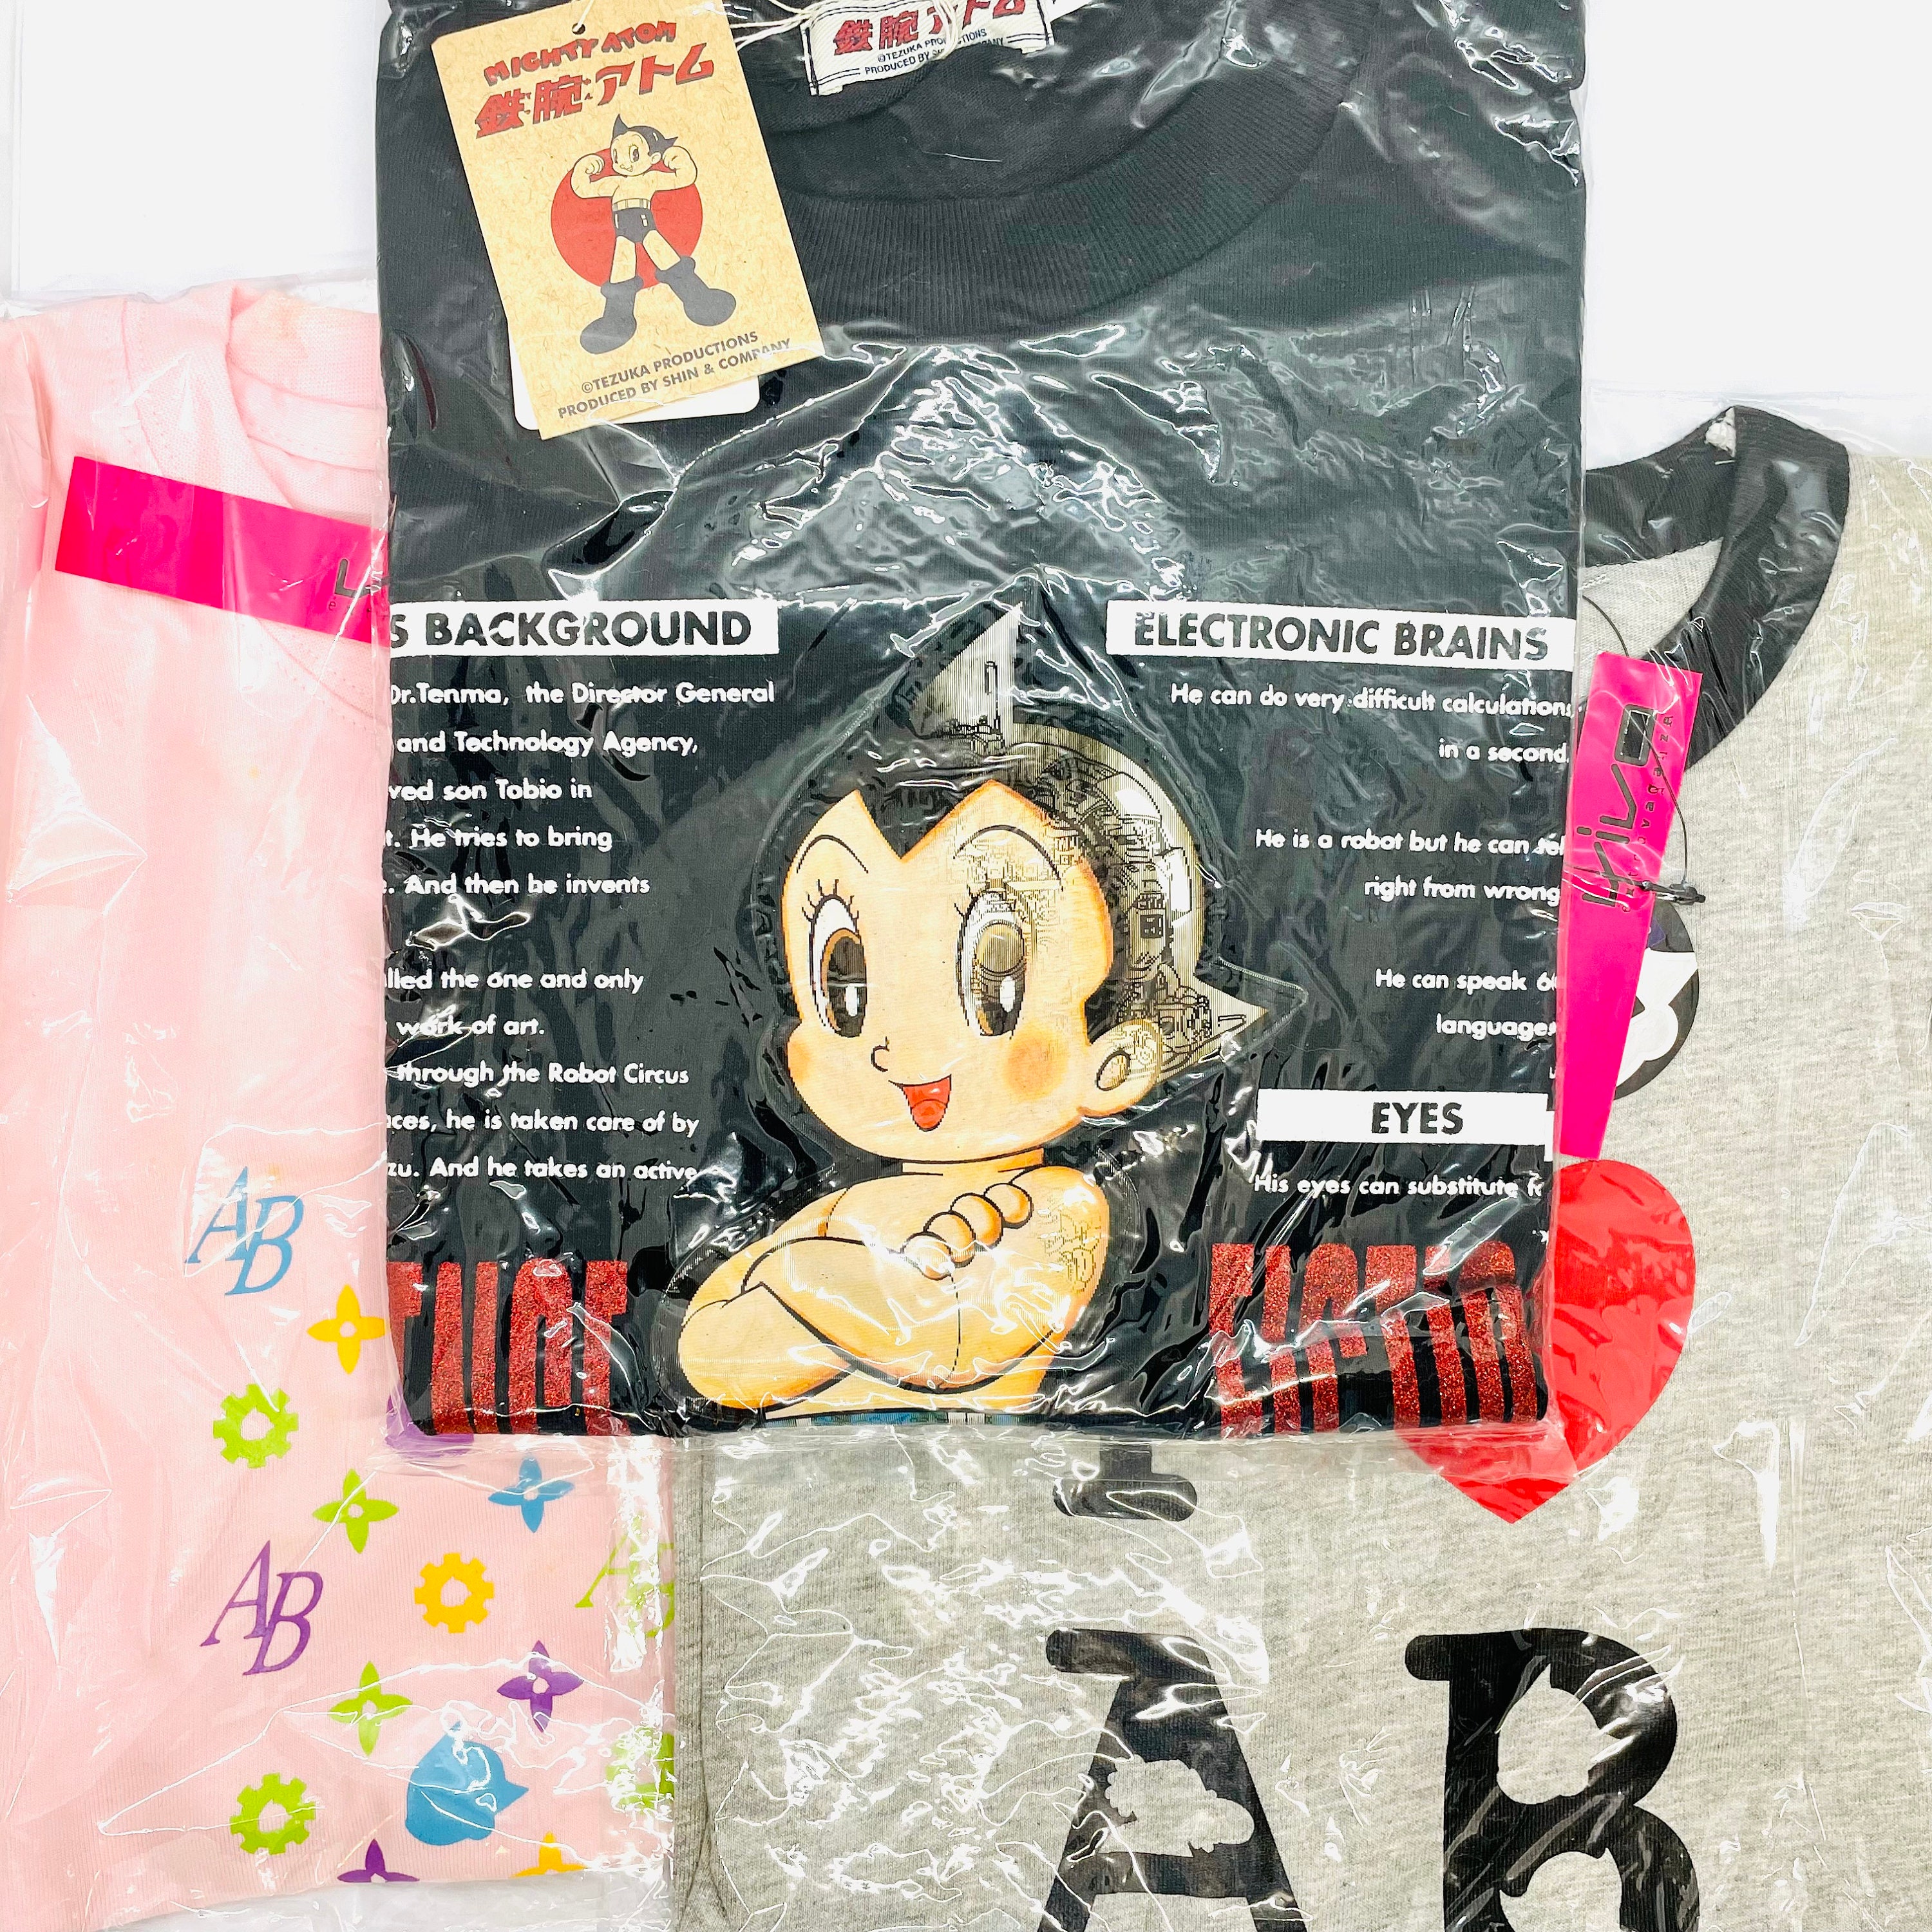 Vintage Astro Boy Japanese Anime Tshirt -  Hong Kong